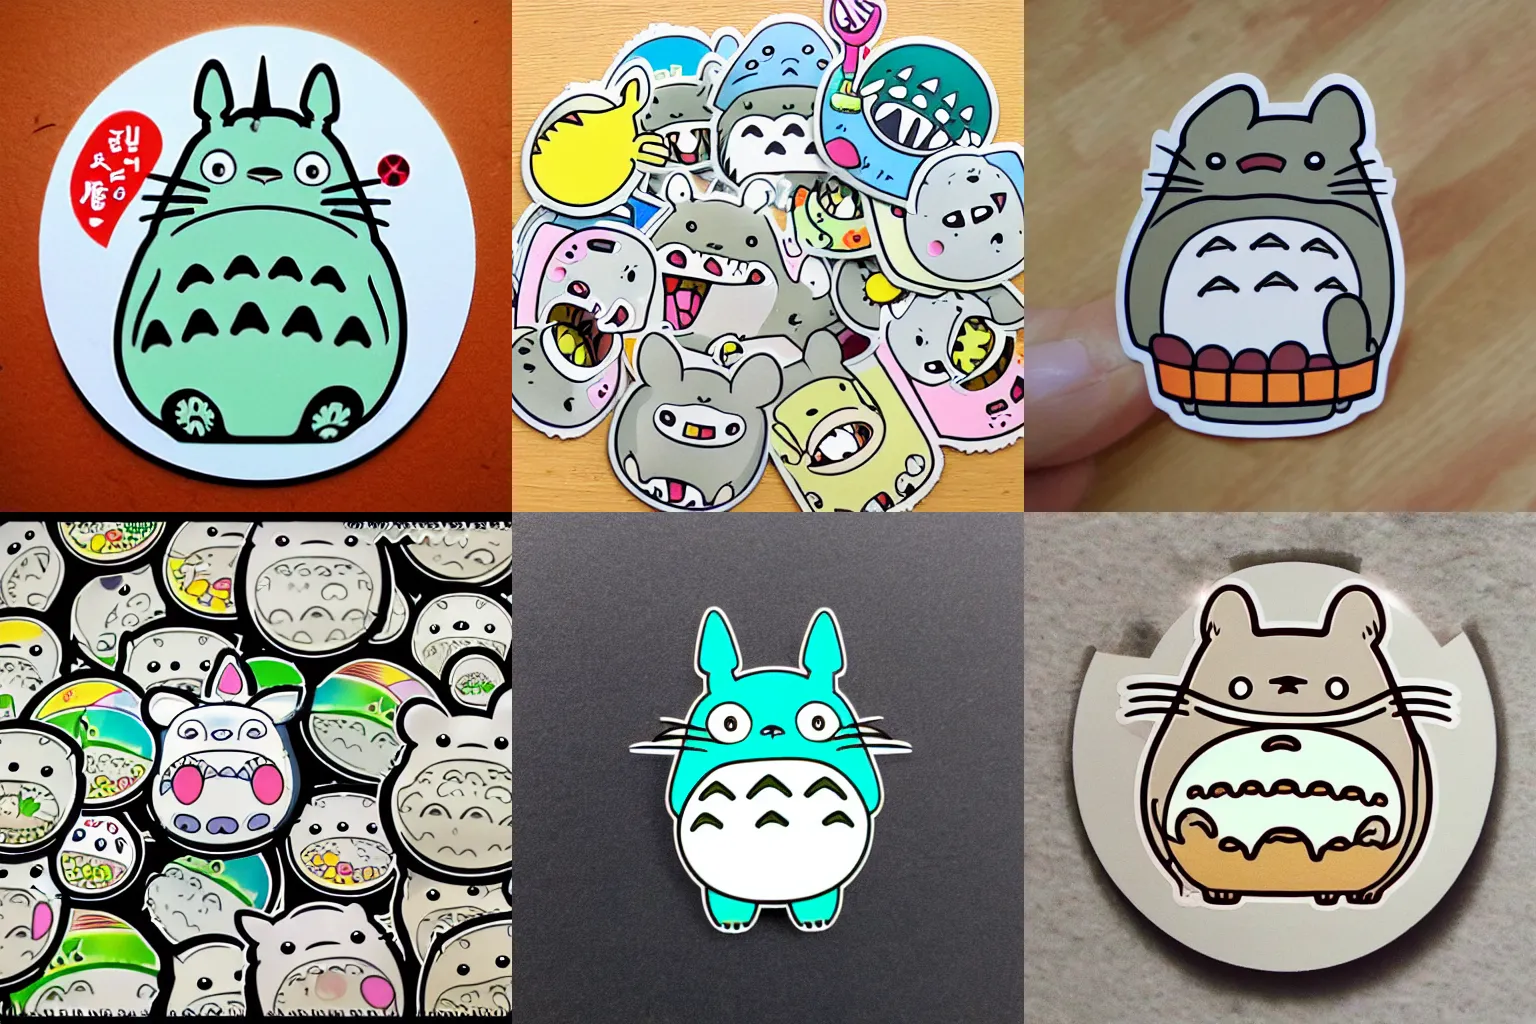 Prompt: totoro by takashi murakami cute sticker design